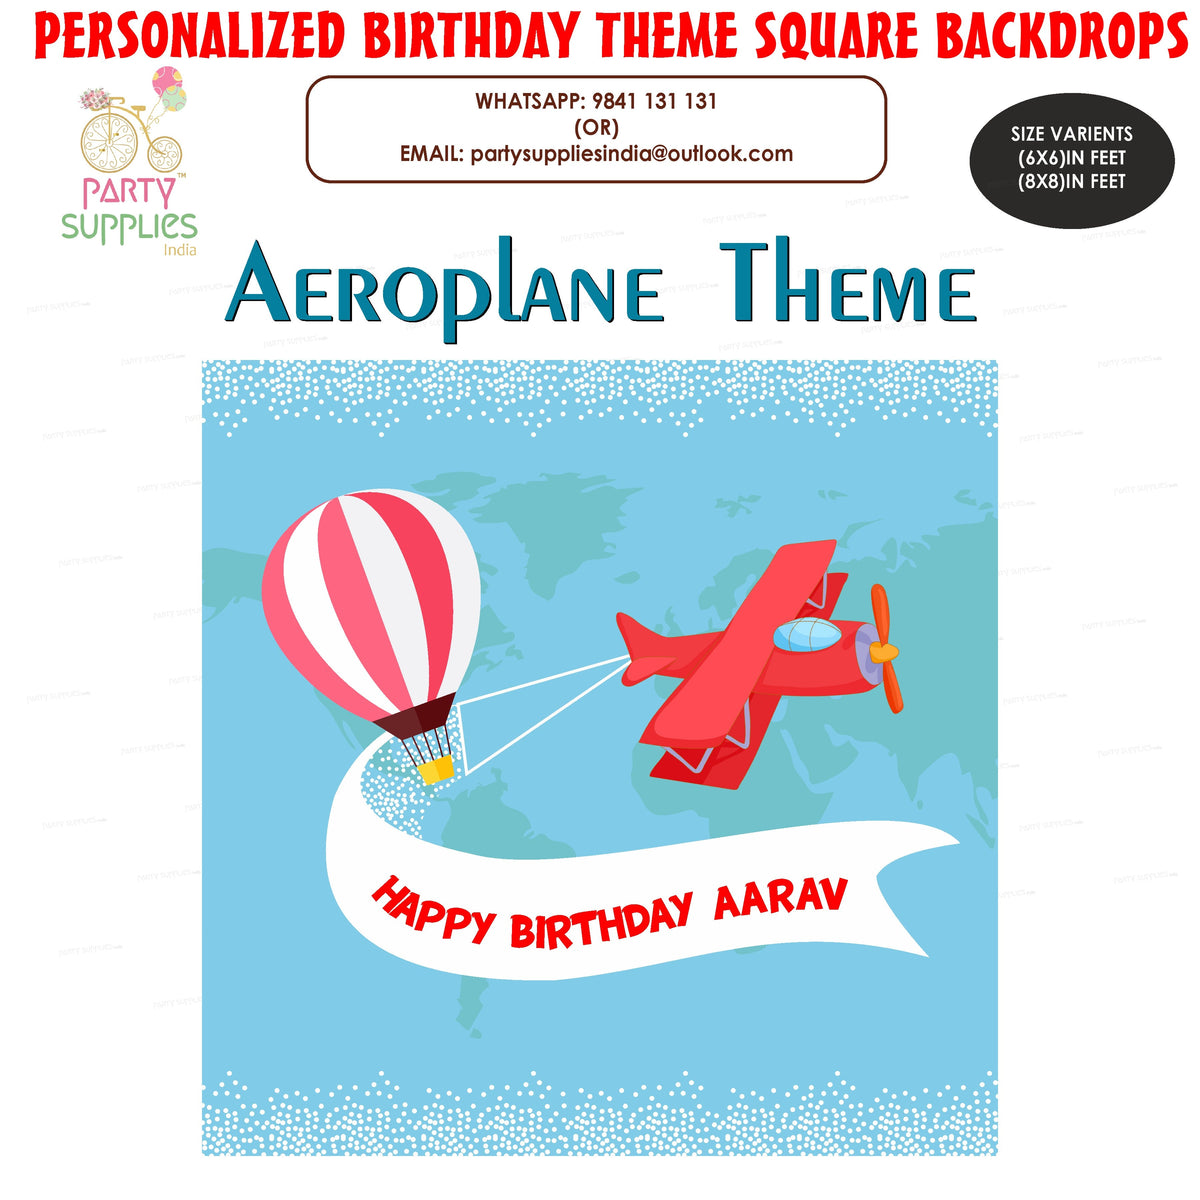 PSI Aeroplane Theme Customized Square Backdrop